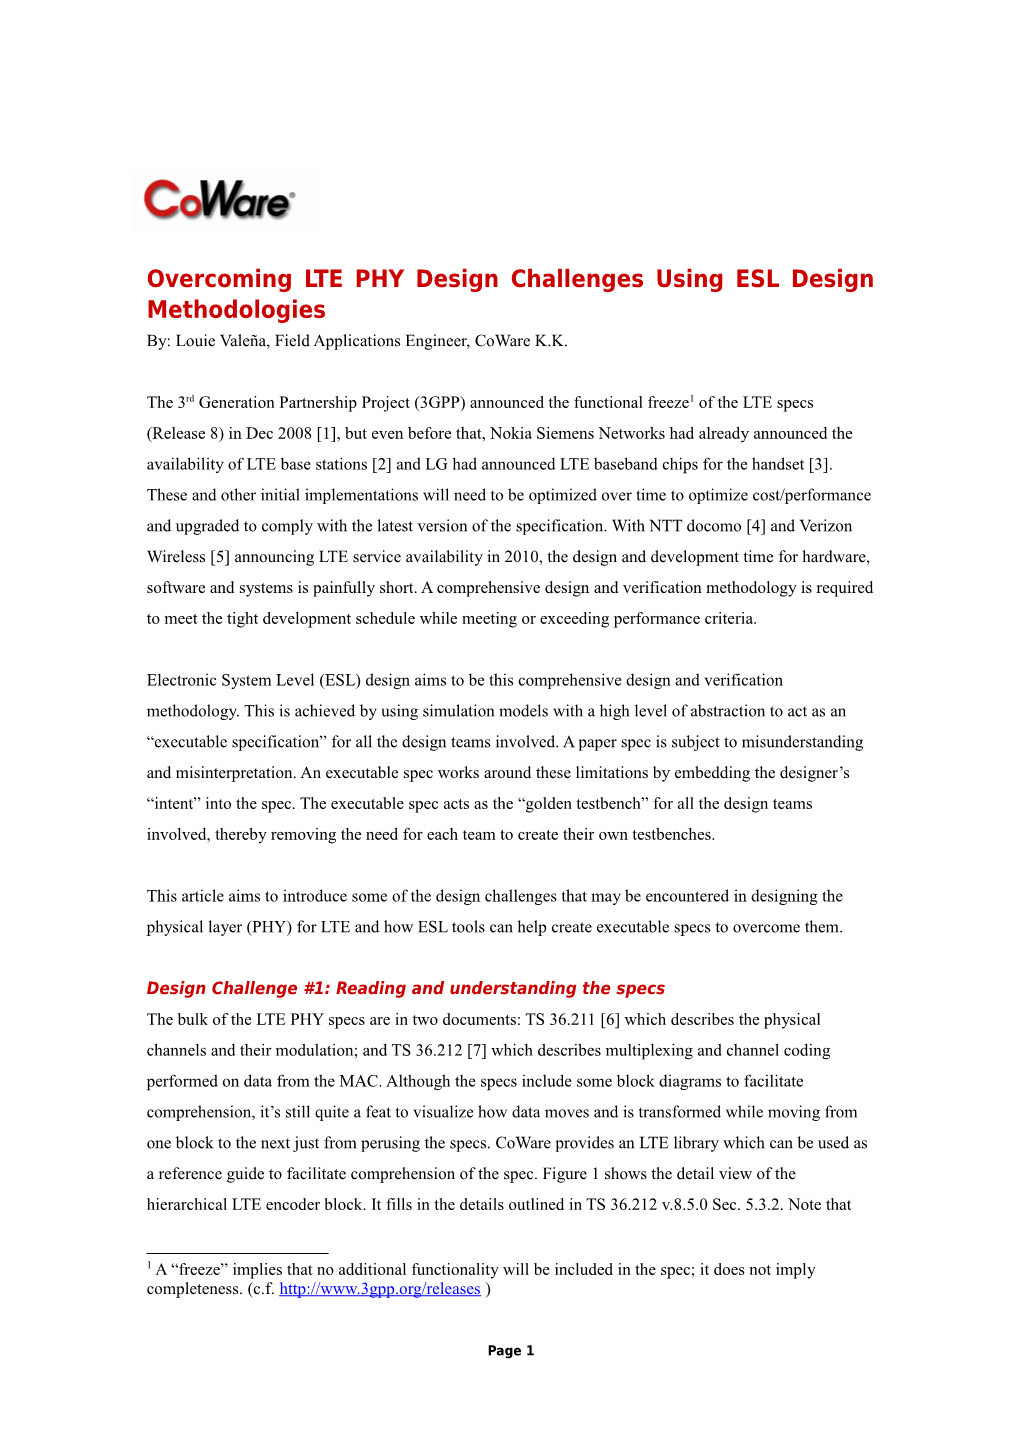 Overcoming LTE PHY Design Challenges Using ESL Design Methodologies